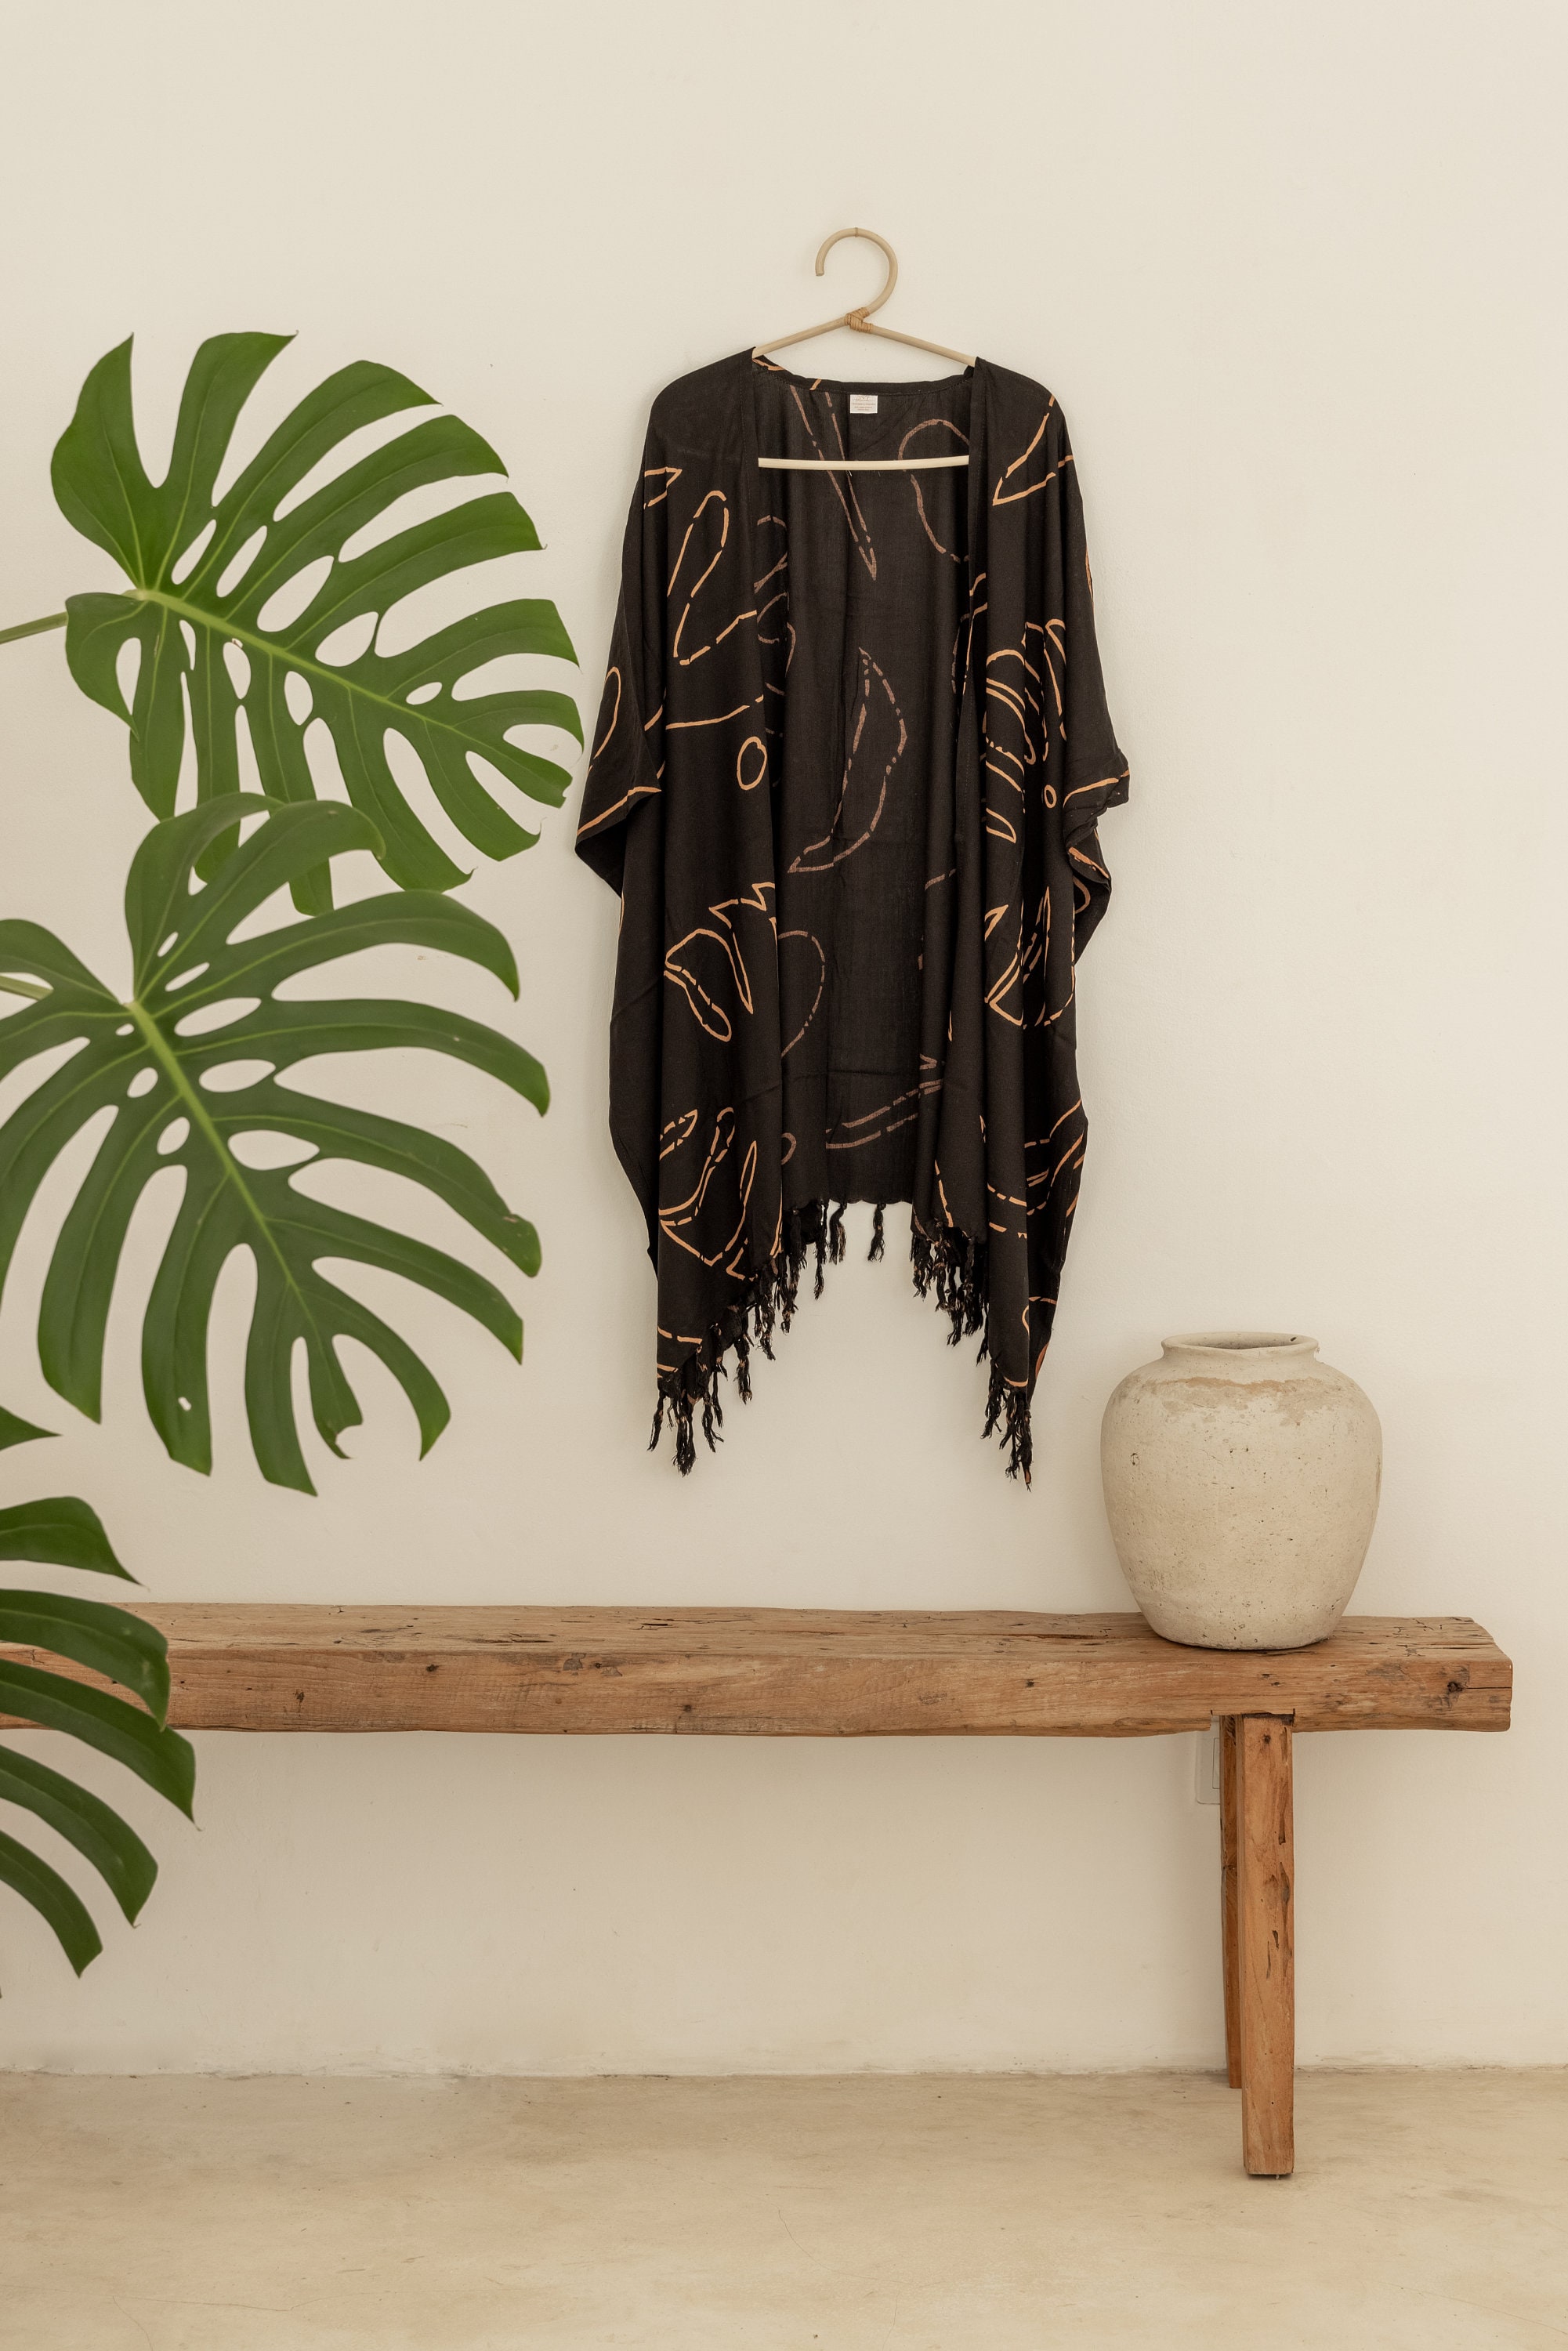 Kleding Dameskleding Tops & T-shirts Tunieken PREORDER Woestijn Kimono in Terracotta 